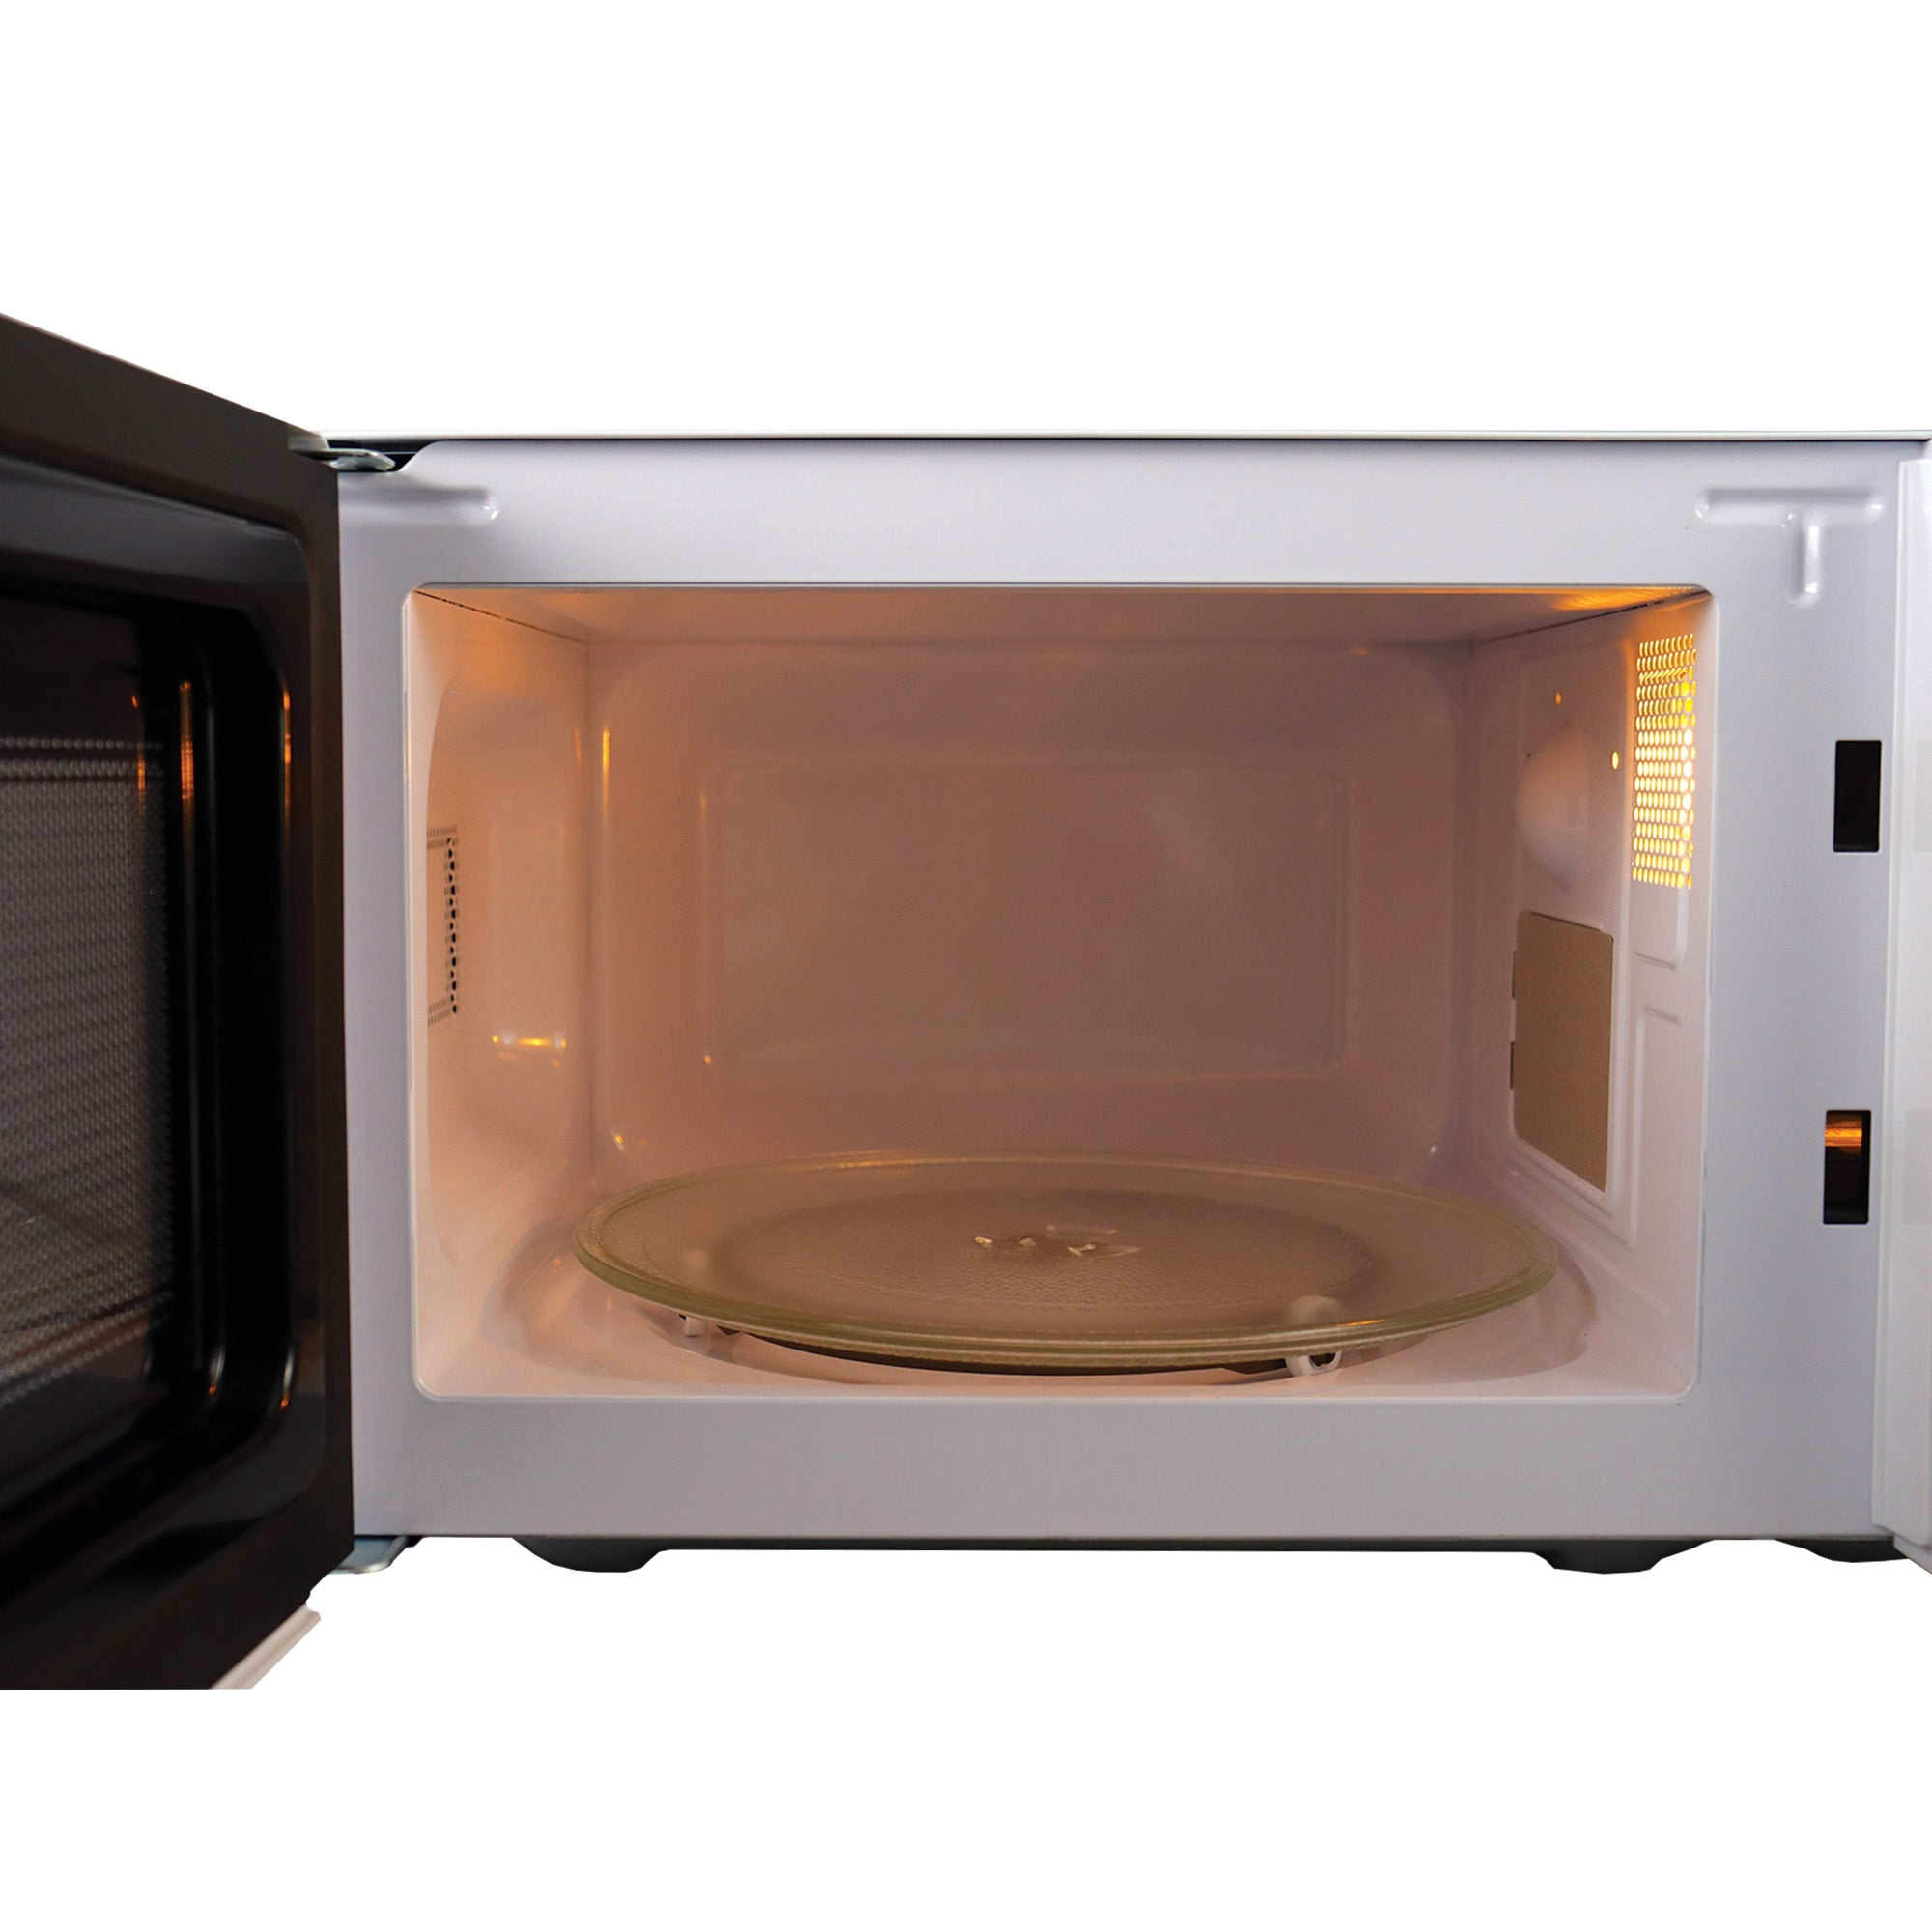 Digital Microwave, 20 Litre, 5 Power Settings, 800W, White